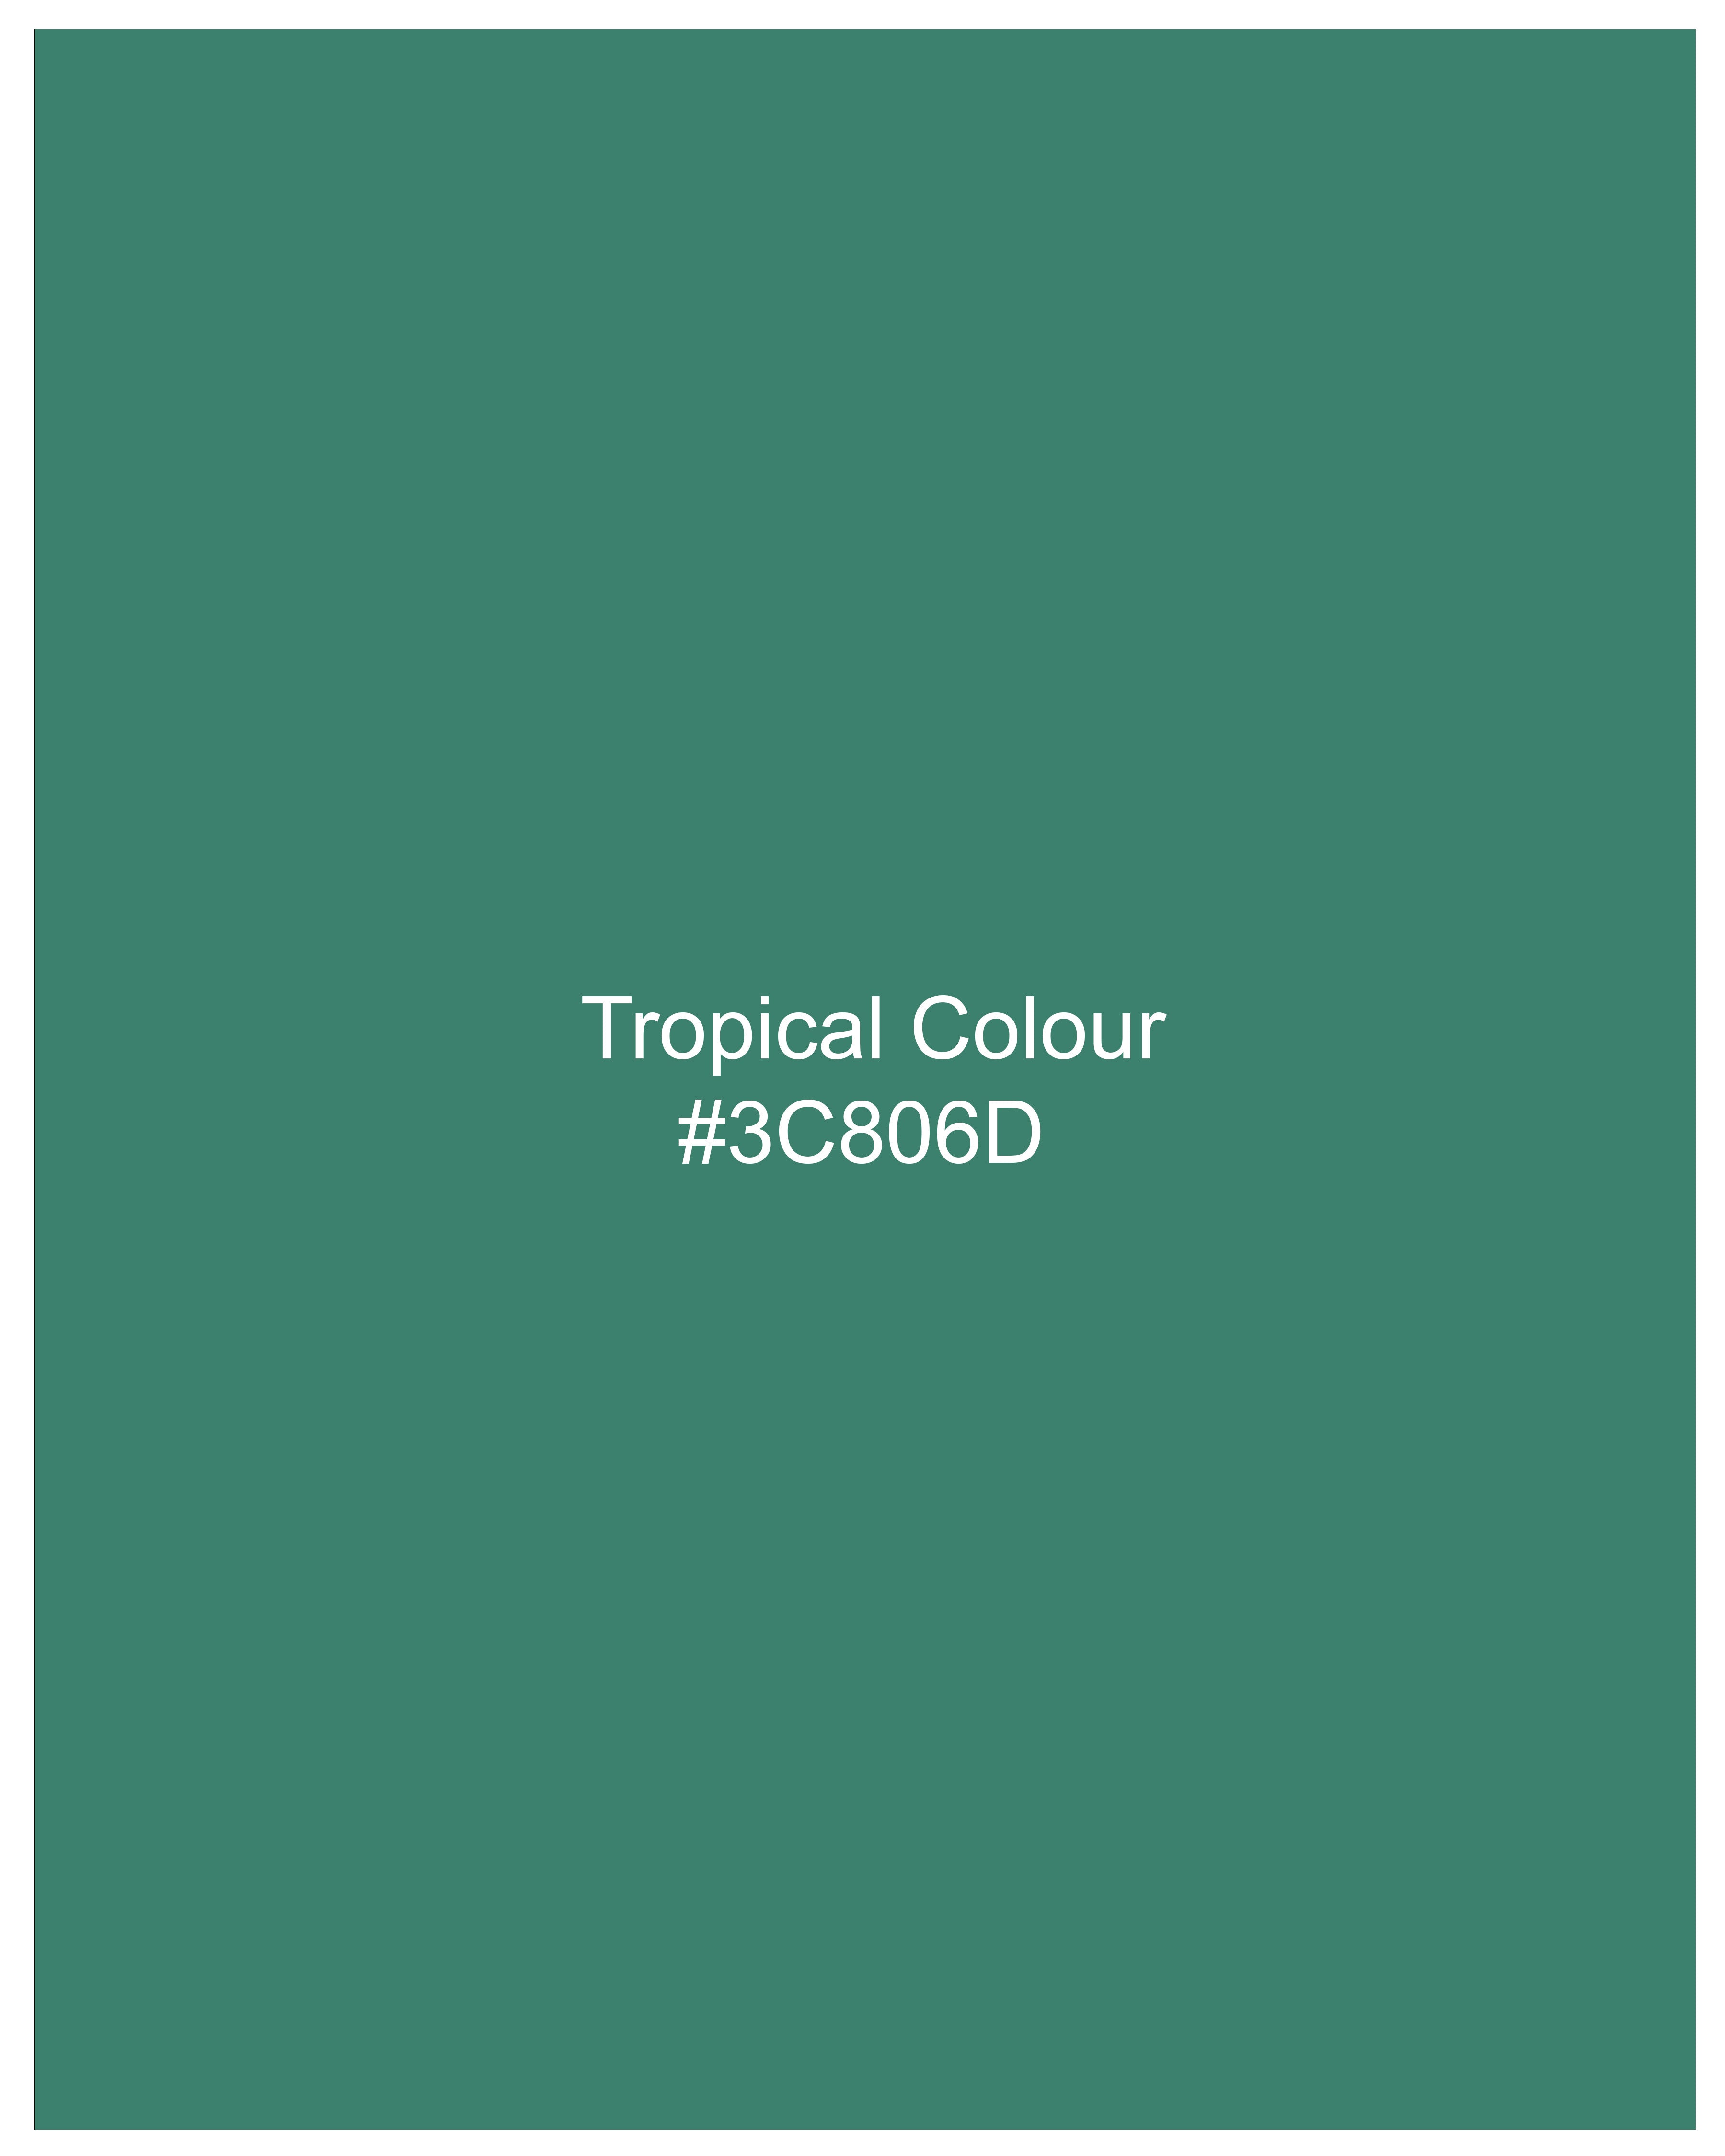 Tropical Green Geometric Hand Painted Premium Cotton T-shirt TS005-W007-S, TS005-W007-M, TS005-W007-L, TS005-W007-XL, TS005-W007-XXL